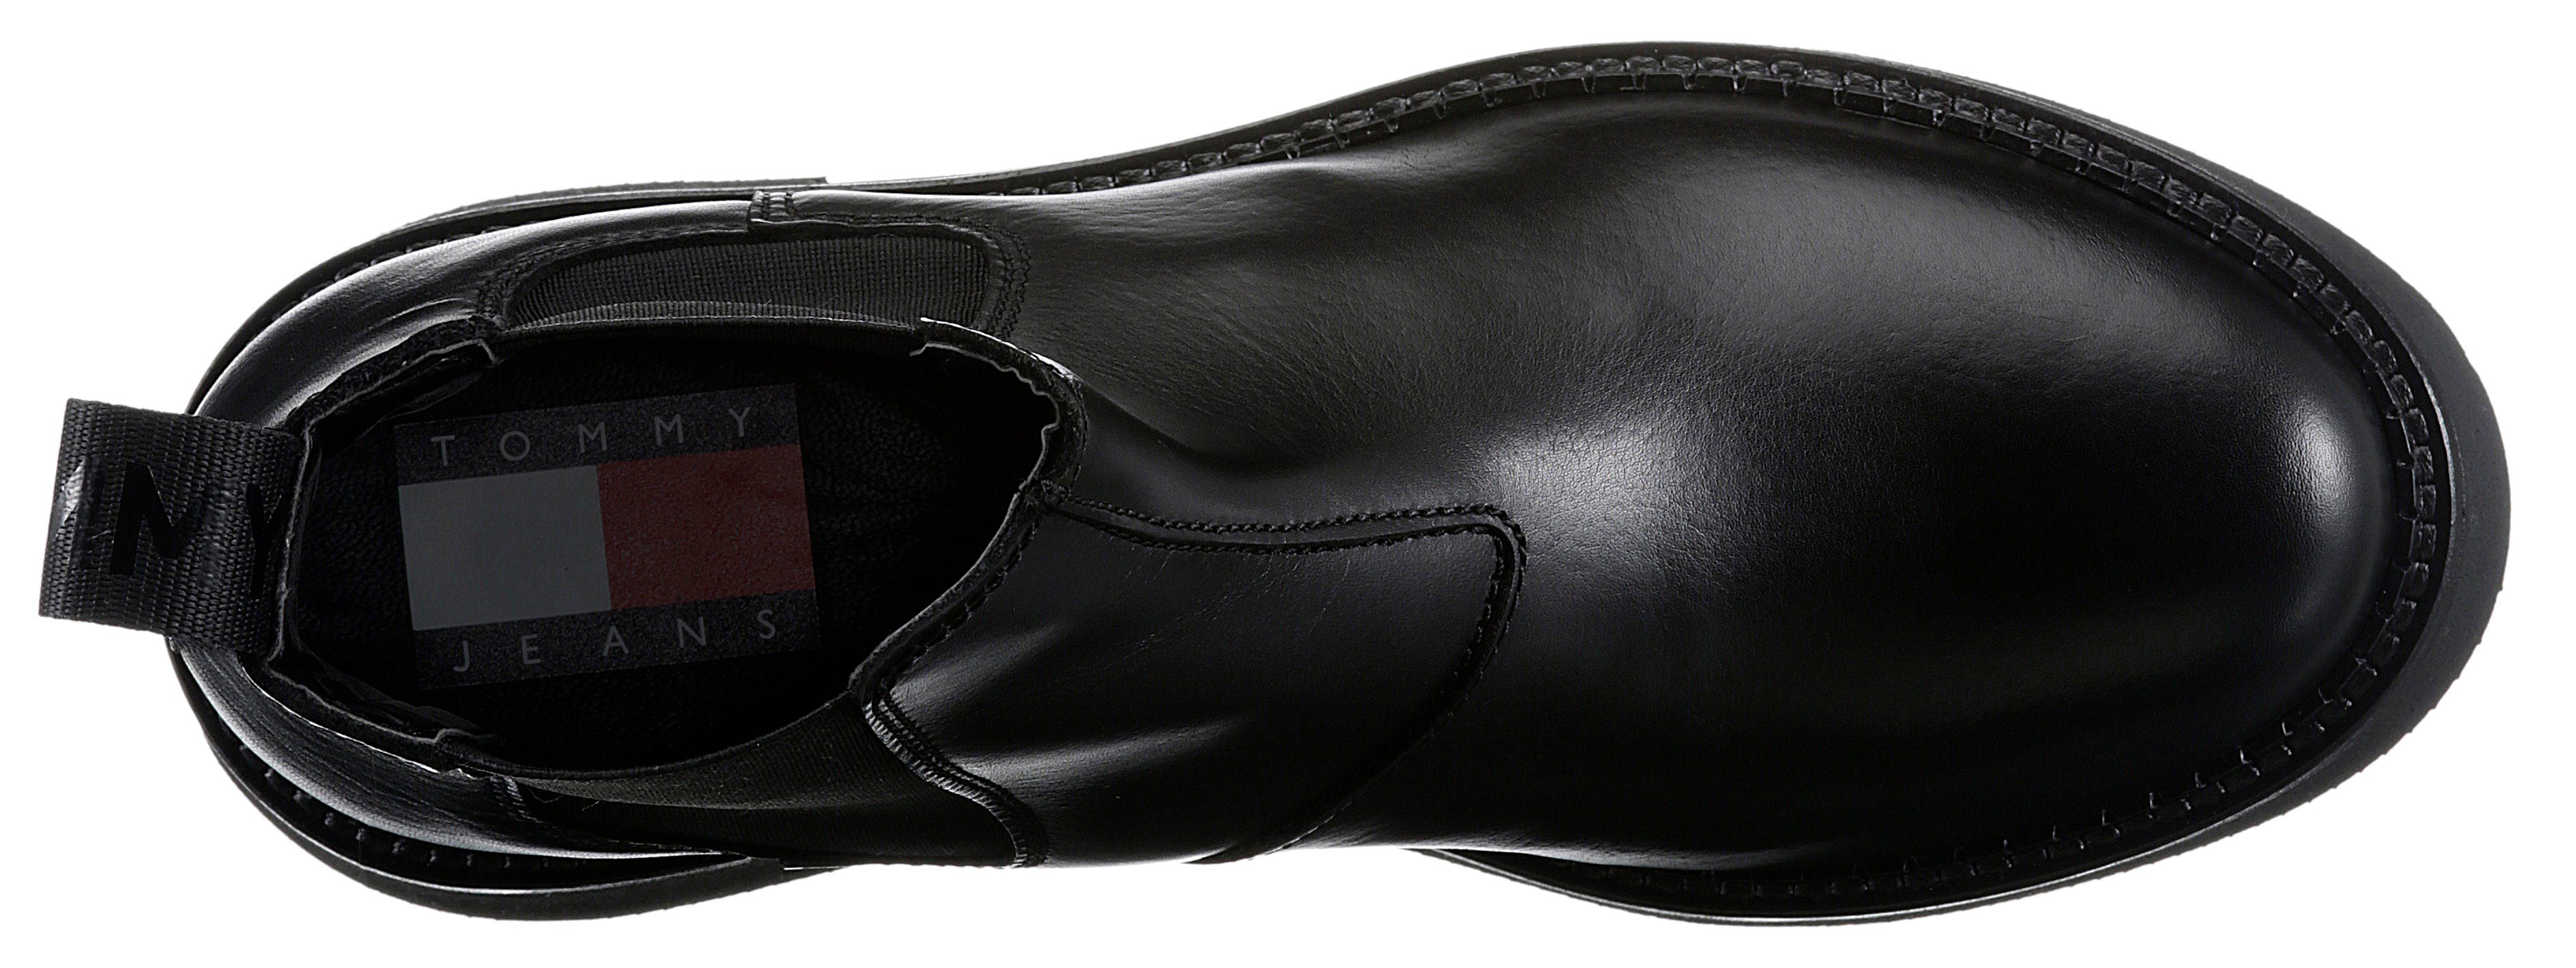 schmale FLAT BOOT Form Tommy Chelseaboots mit Jeans TJW CHELSEA Stretcheinsatz, komfortablem